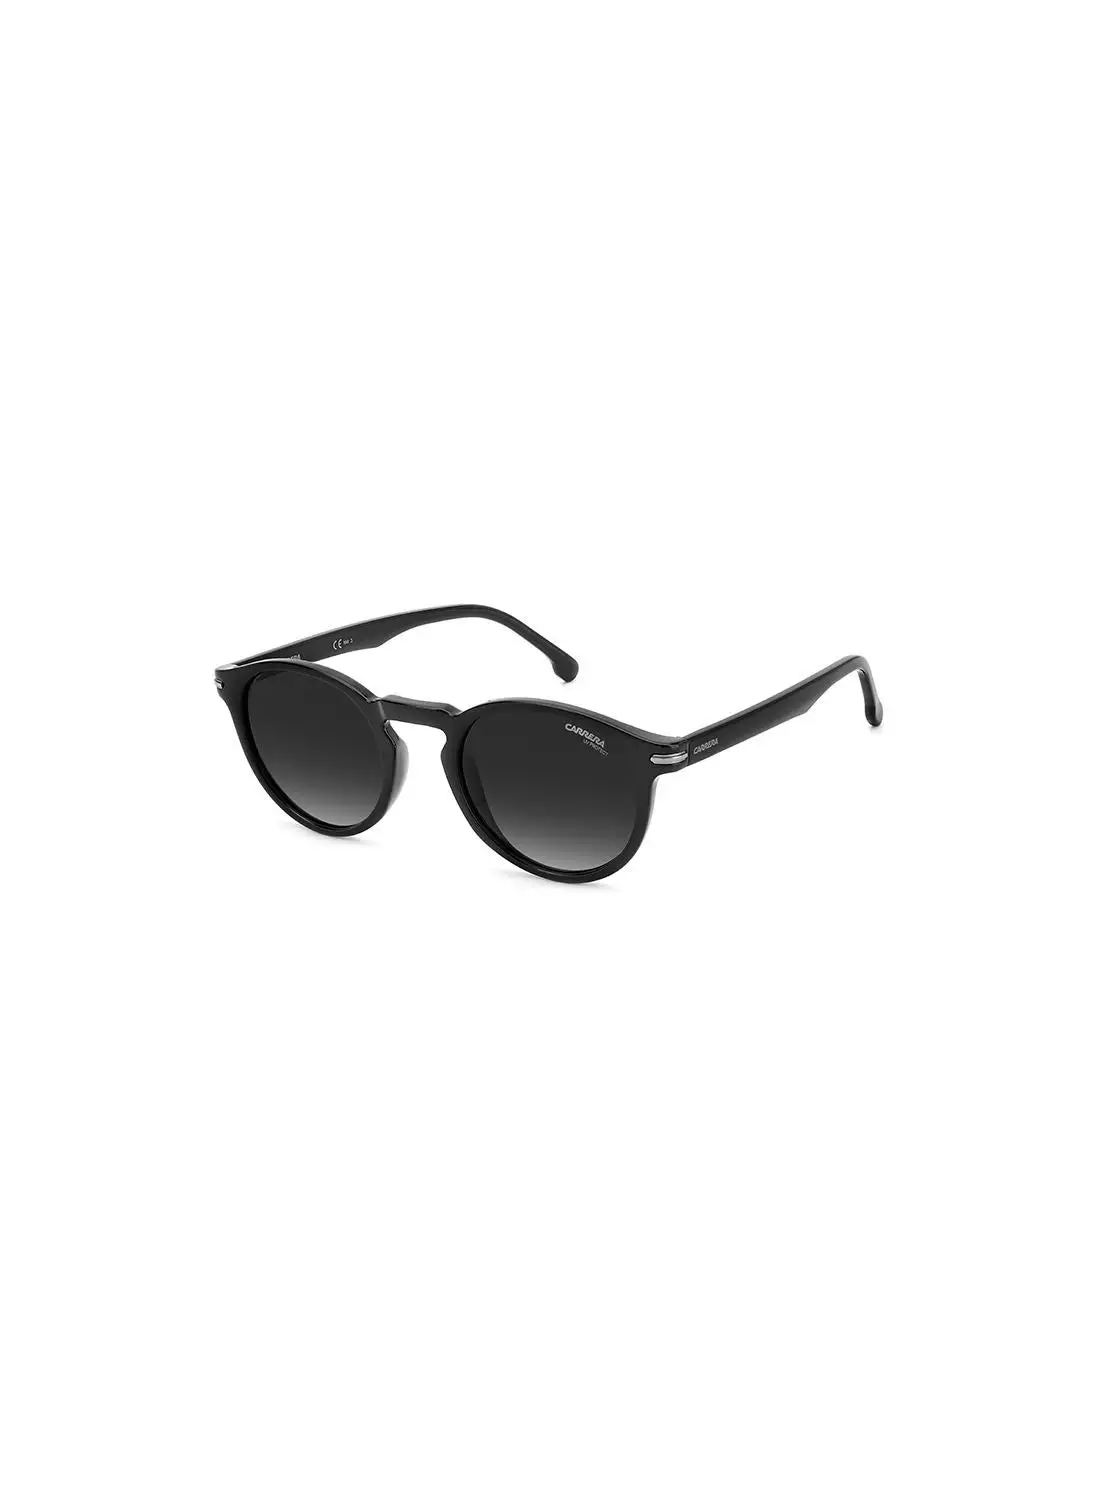 Carrera Unisex UV Protection Round Sunglasses - Carrera 301/S Black 50 - Lens Size: 50 Mm